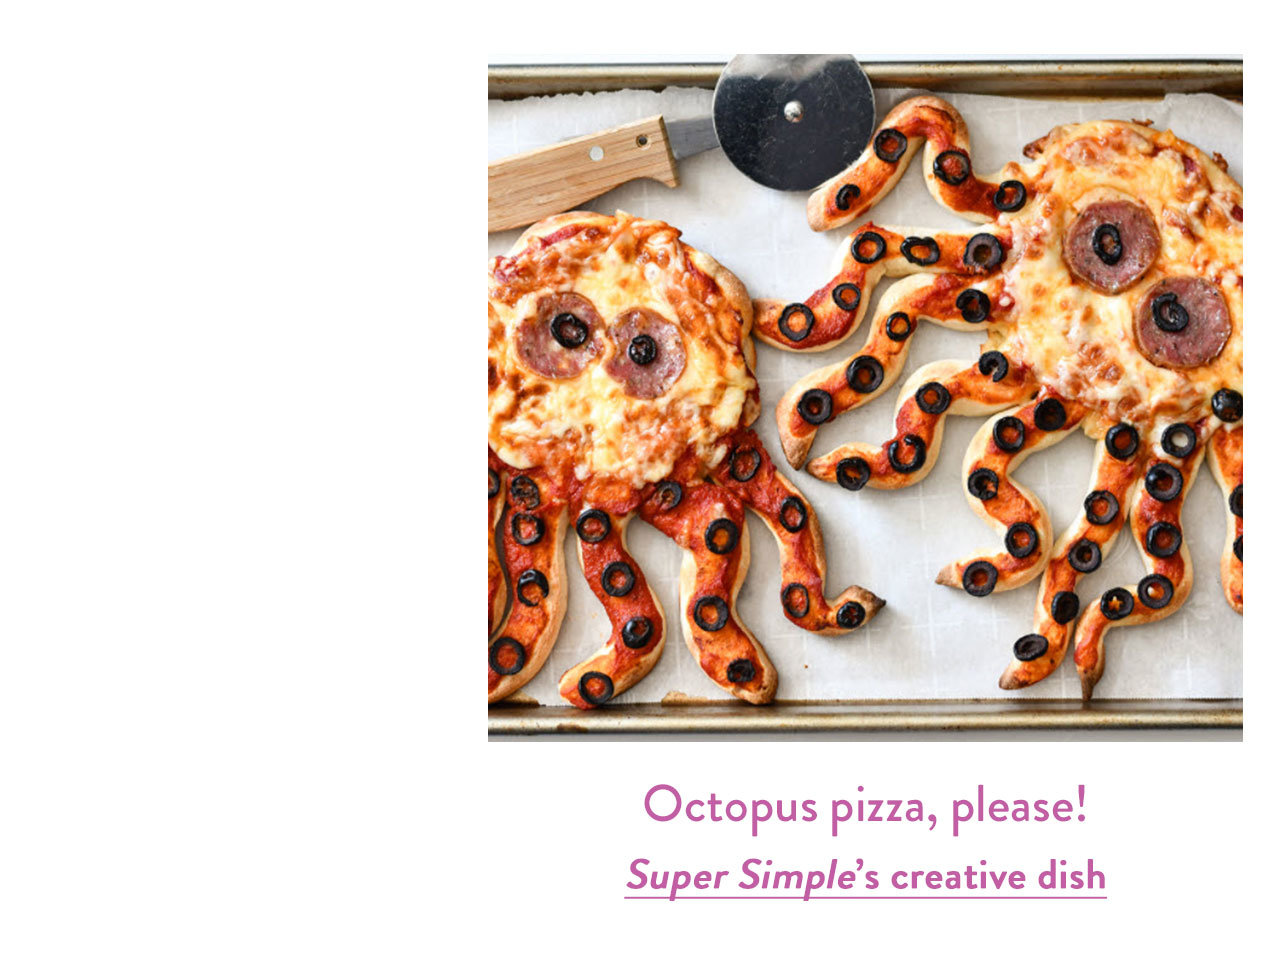 Octopus pizza